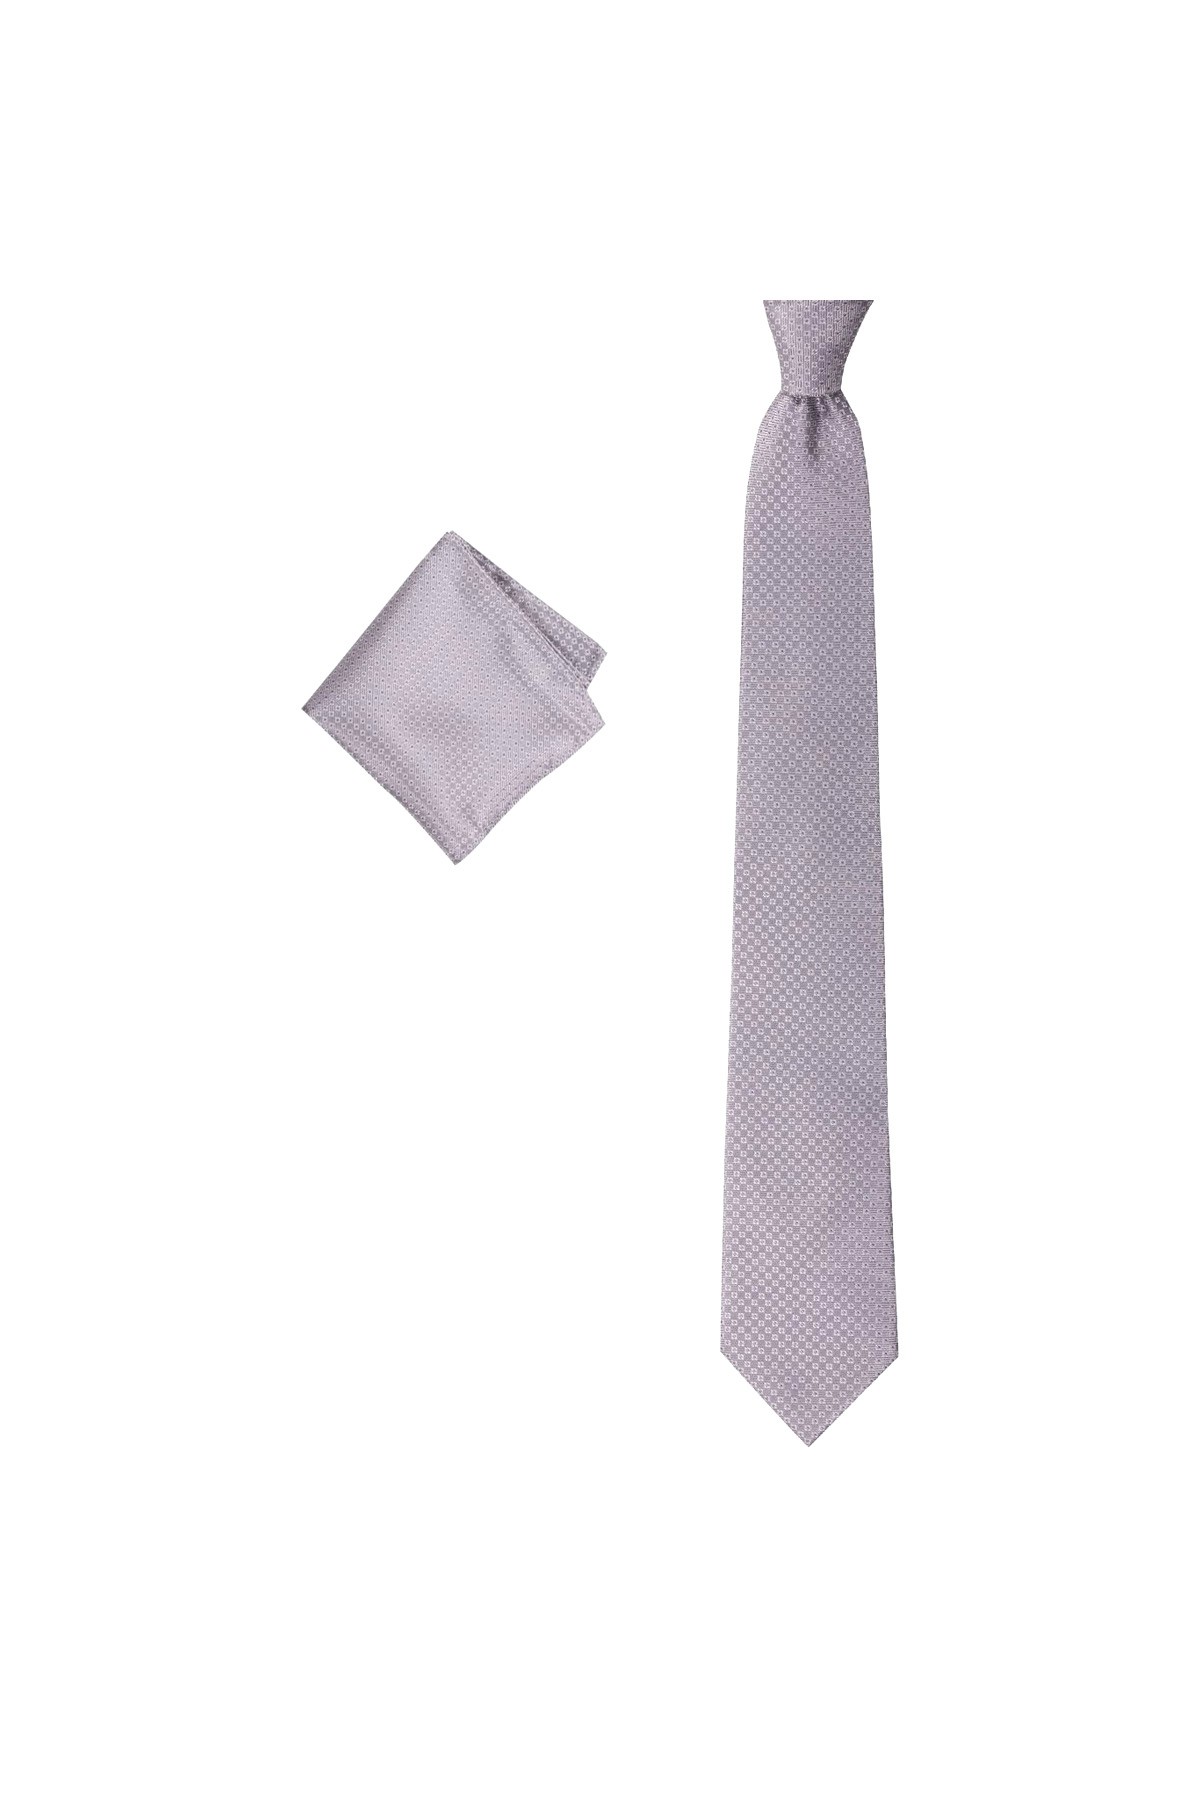 Düz renkli 8 cm genişliğinde mendilli kravat - Açık gri